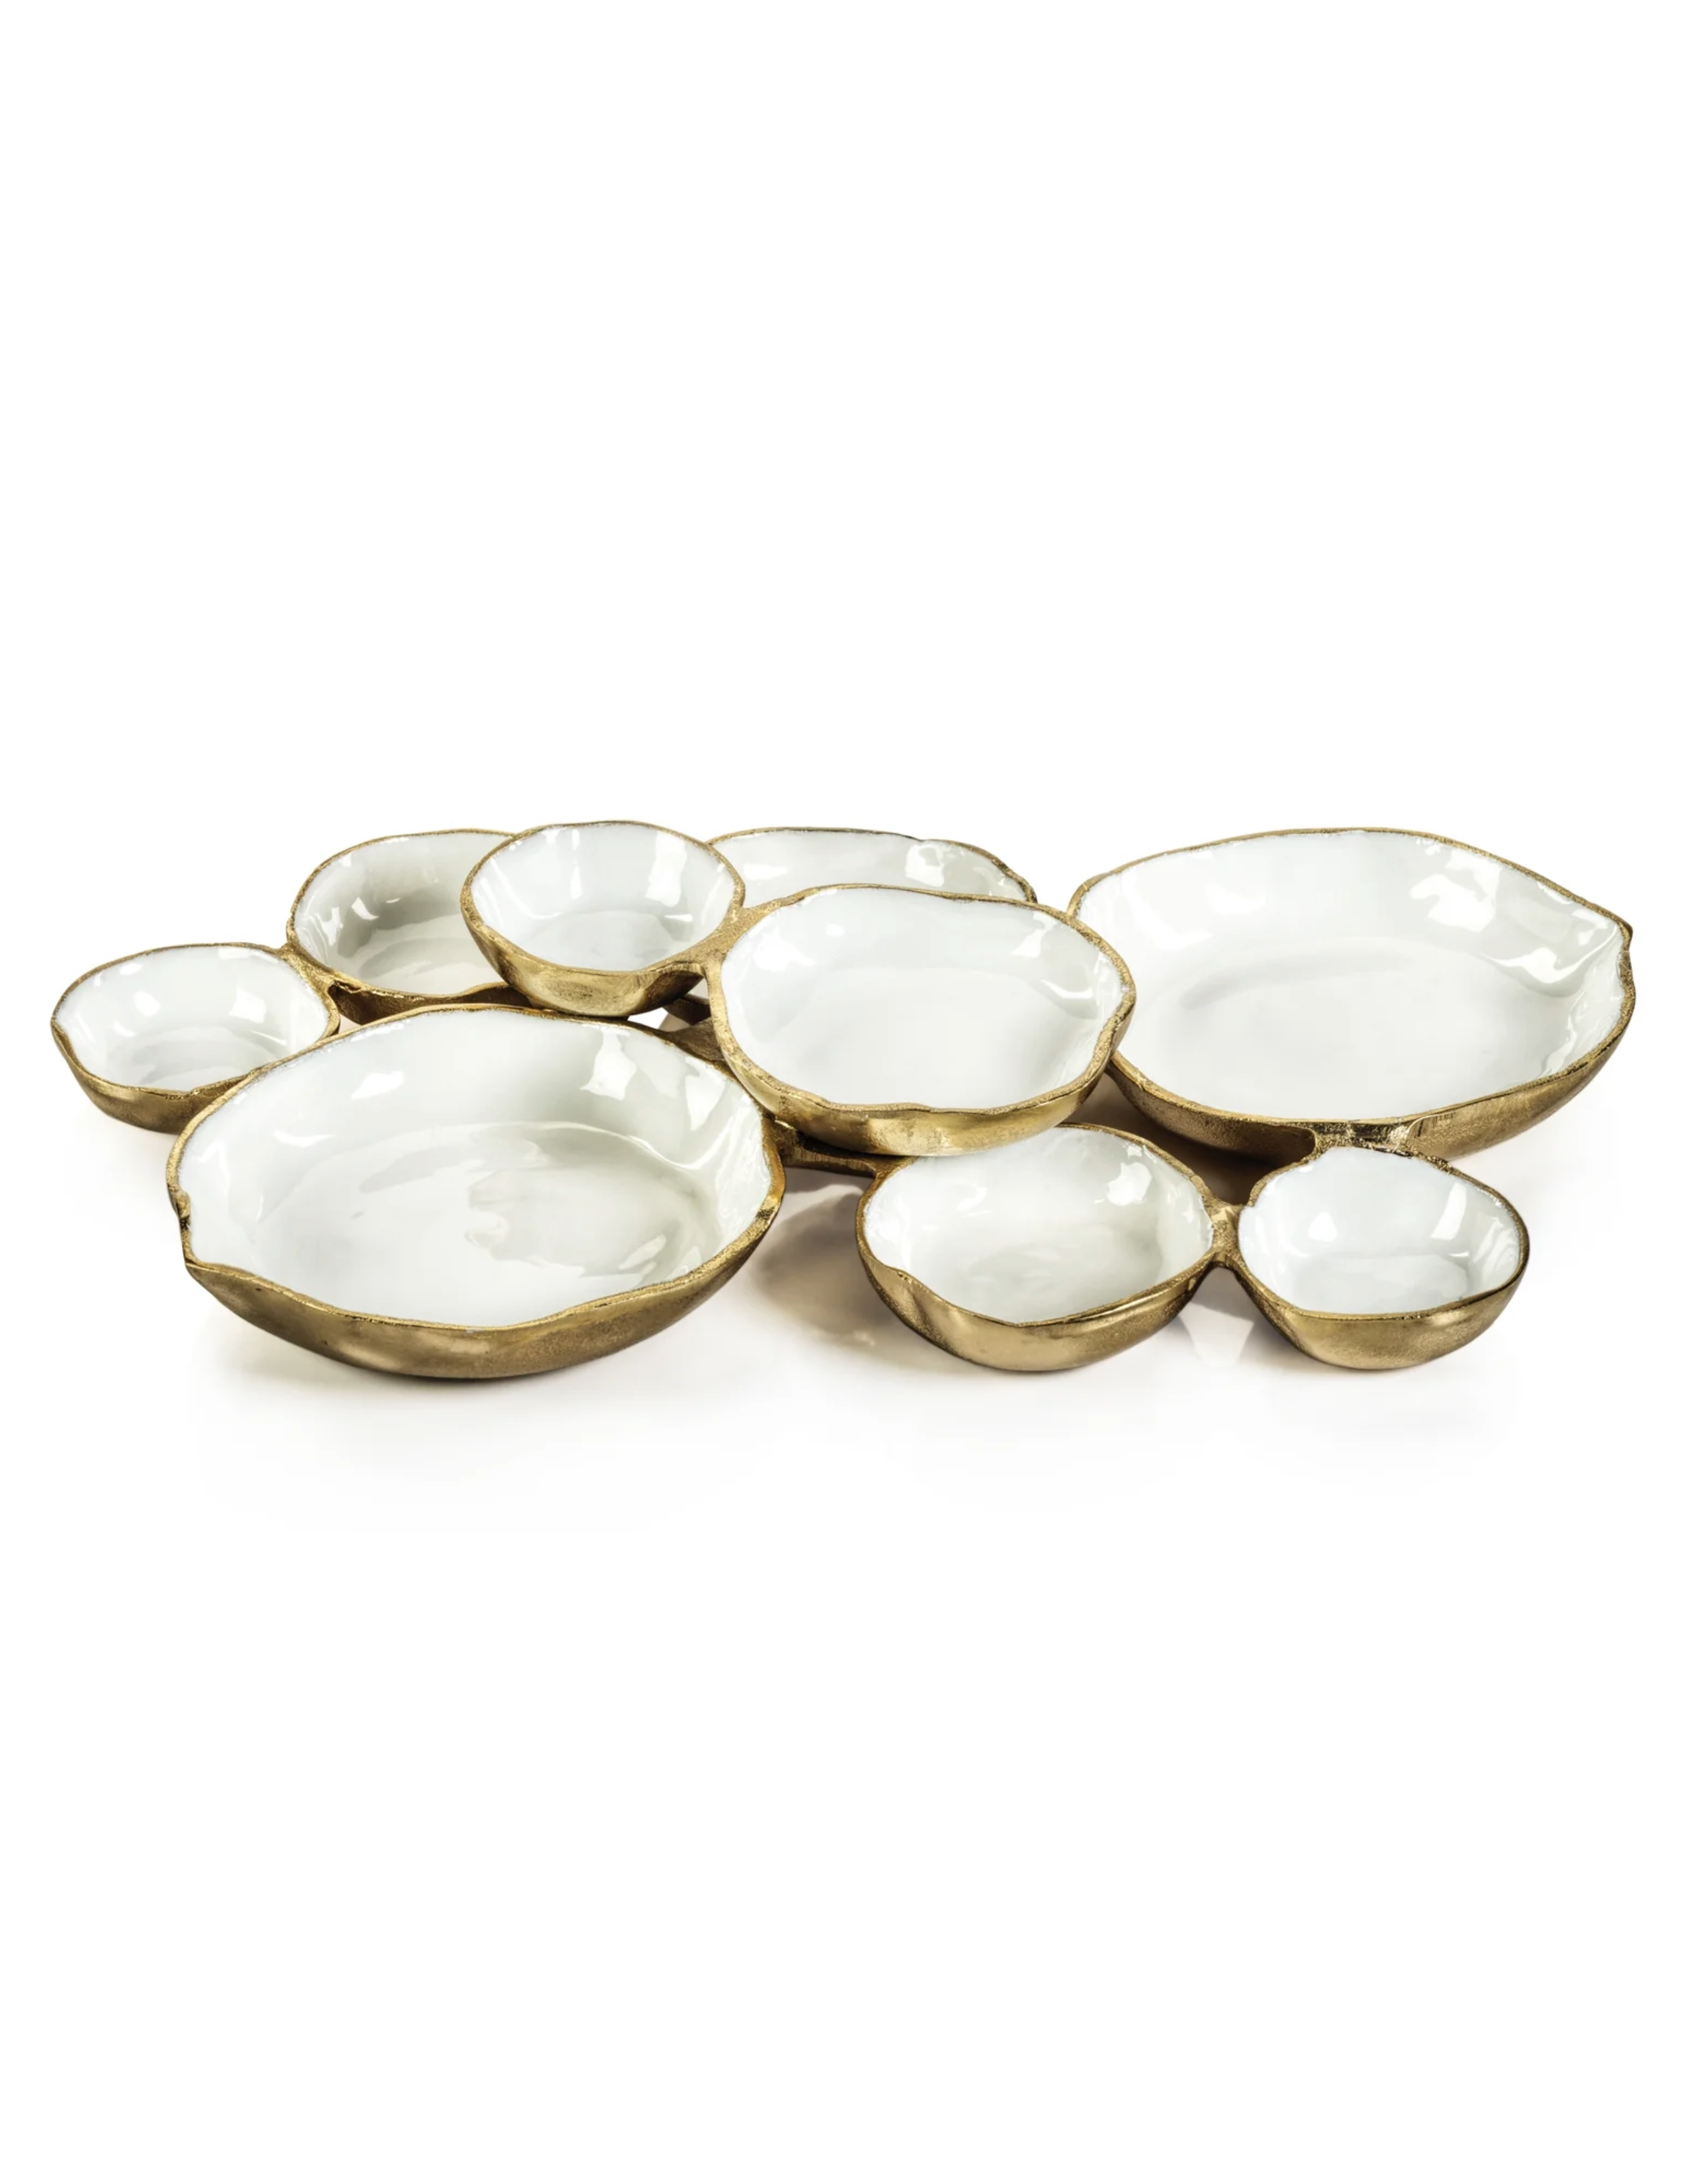 Cluster of Nine Serving Bowls - Gold and White Enamel